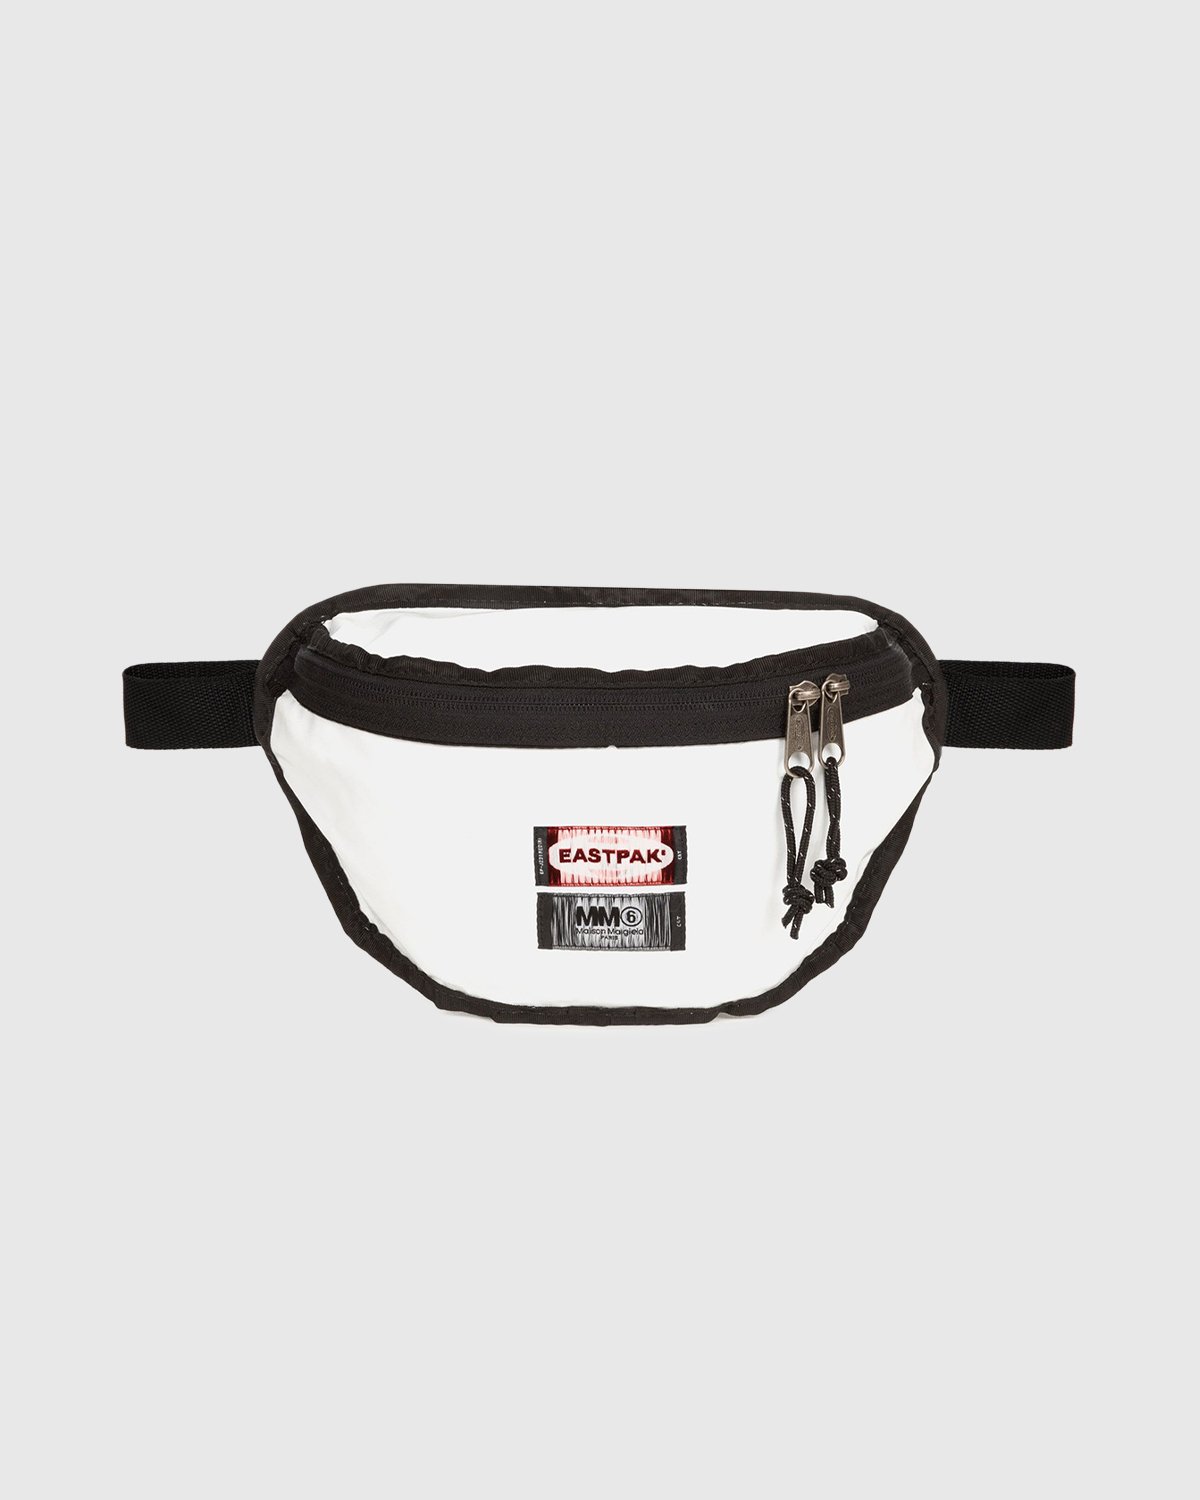 MM6 Maison Margiela x Eastpak - Belt Bag Black - Accessories - Black - Image 4